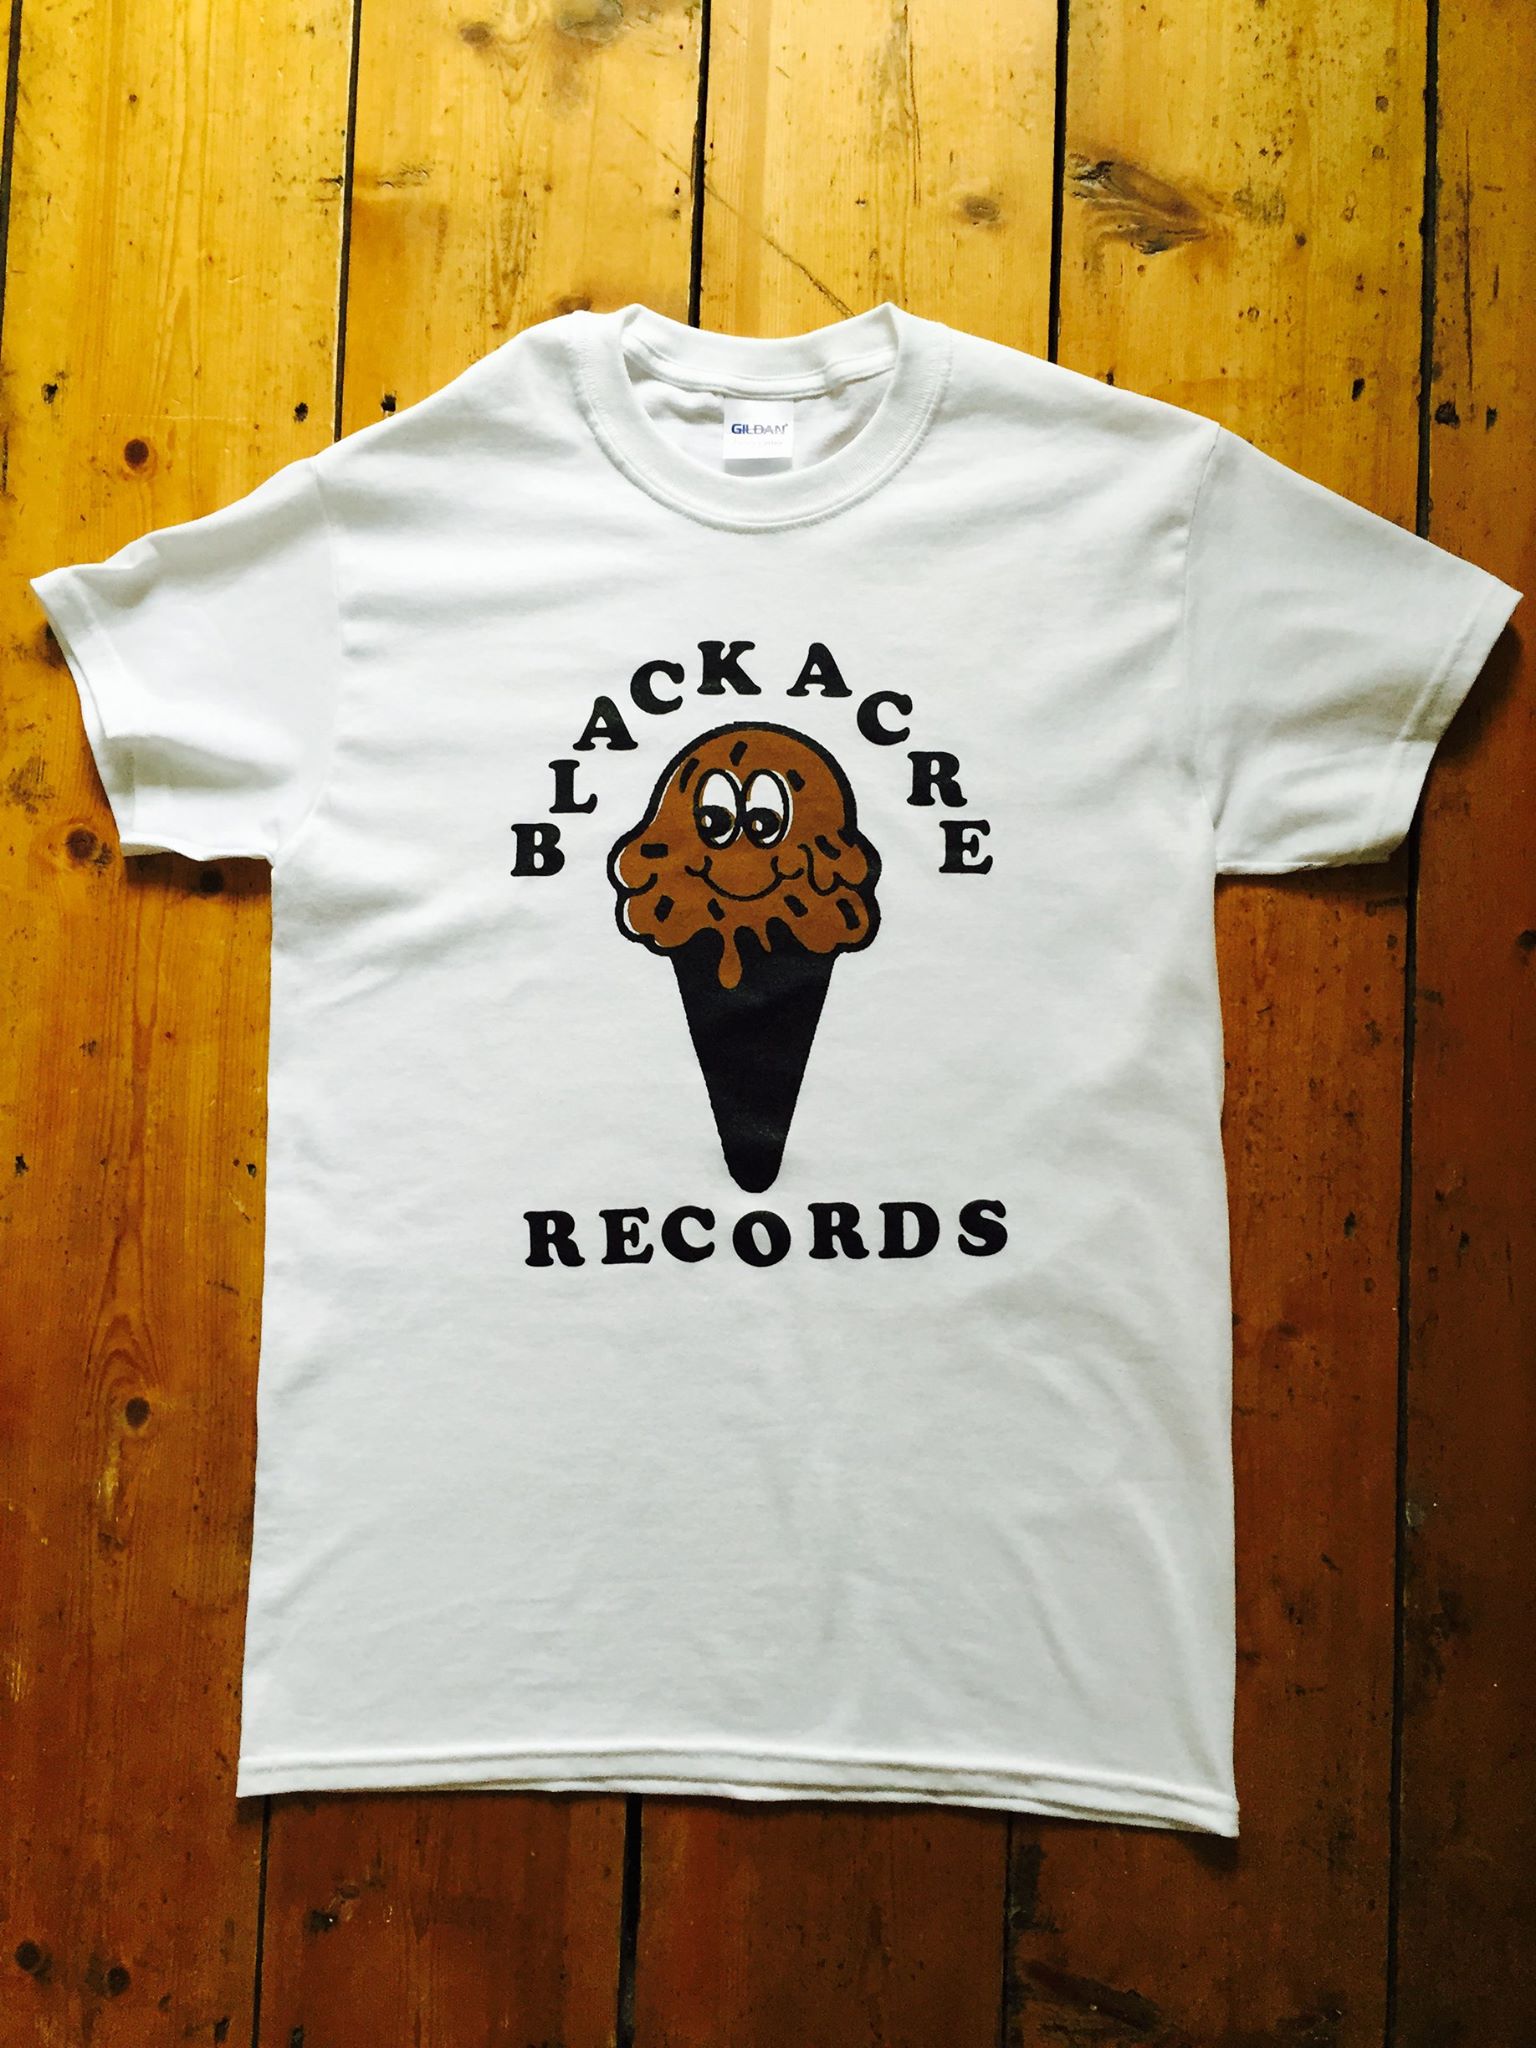 Black Acre Ice Cream T Shirt.jpg